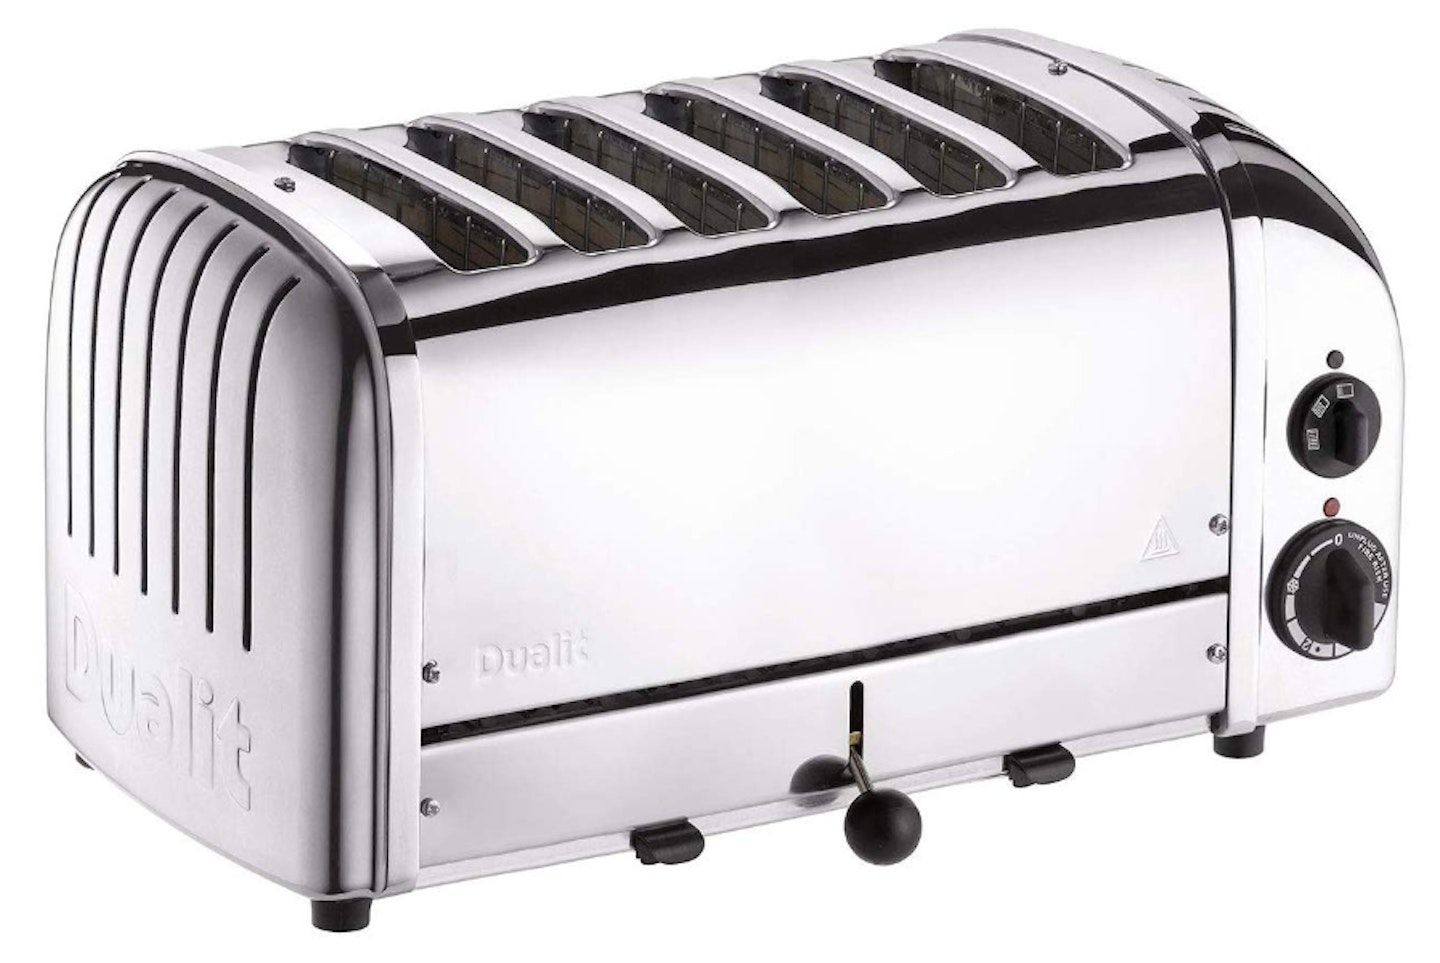 Dualit 6 Slice Toaster 60144 u2013 Polished